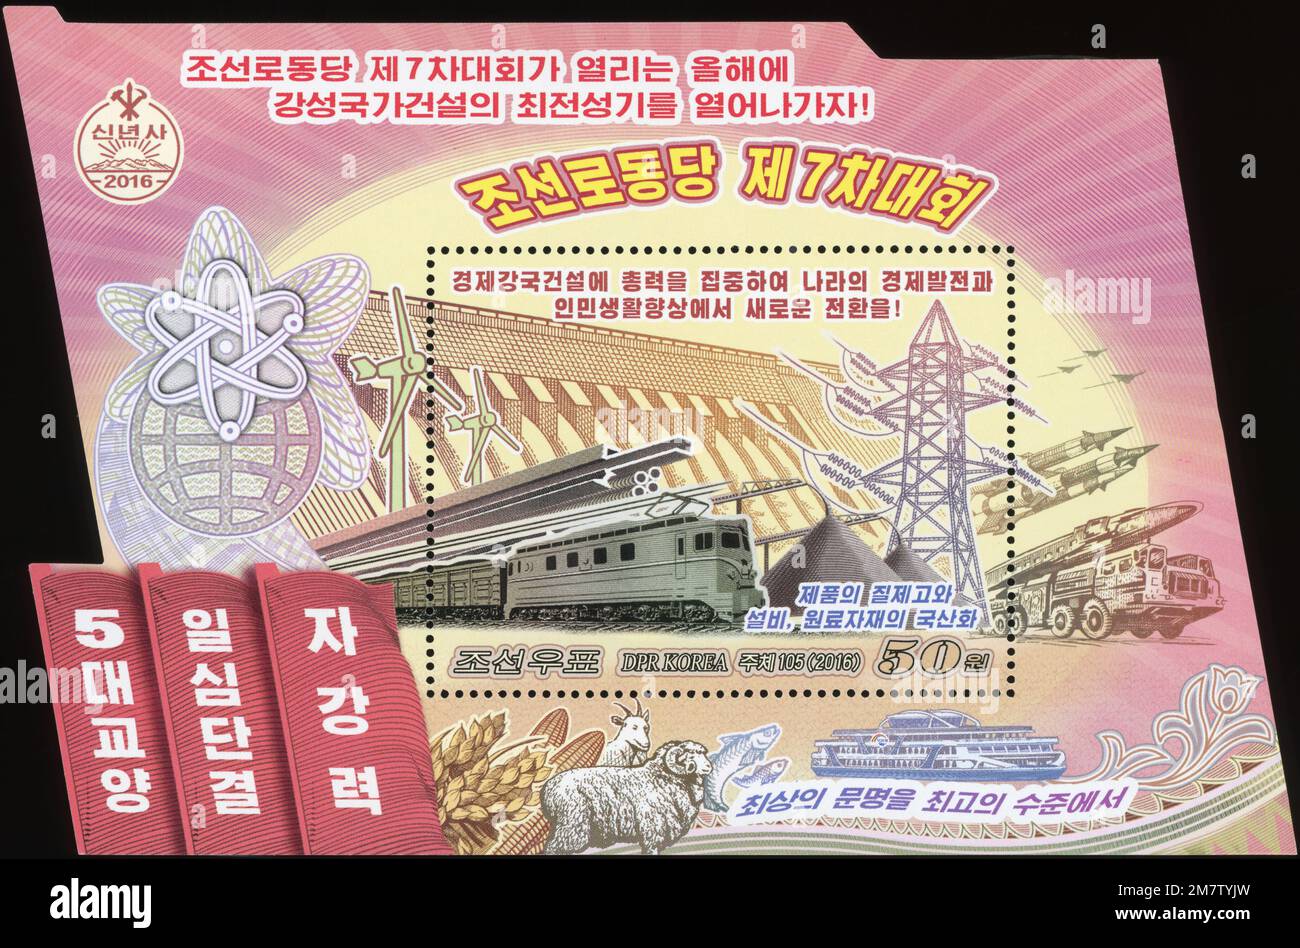 2016 North Korea stamp. Kim Jong-un's New Year Speech Stock Photo